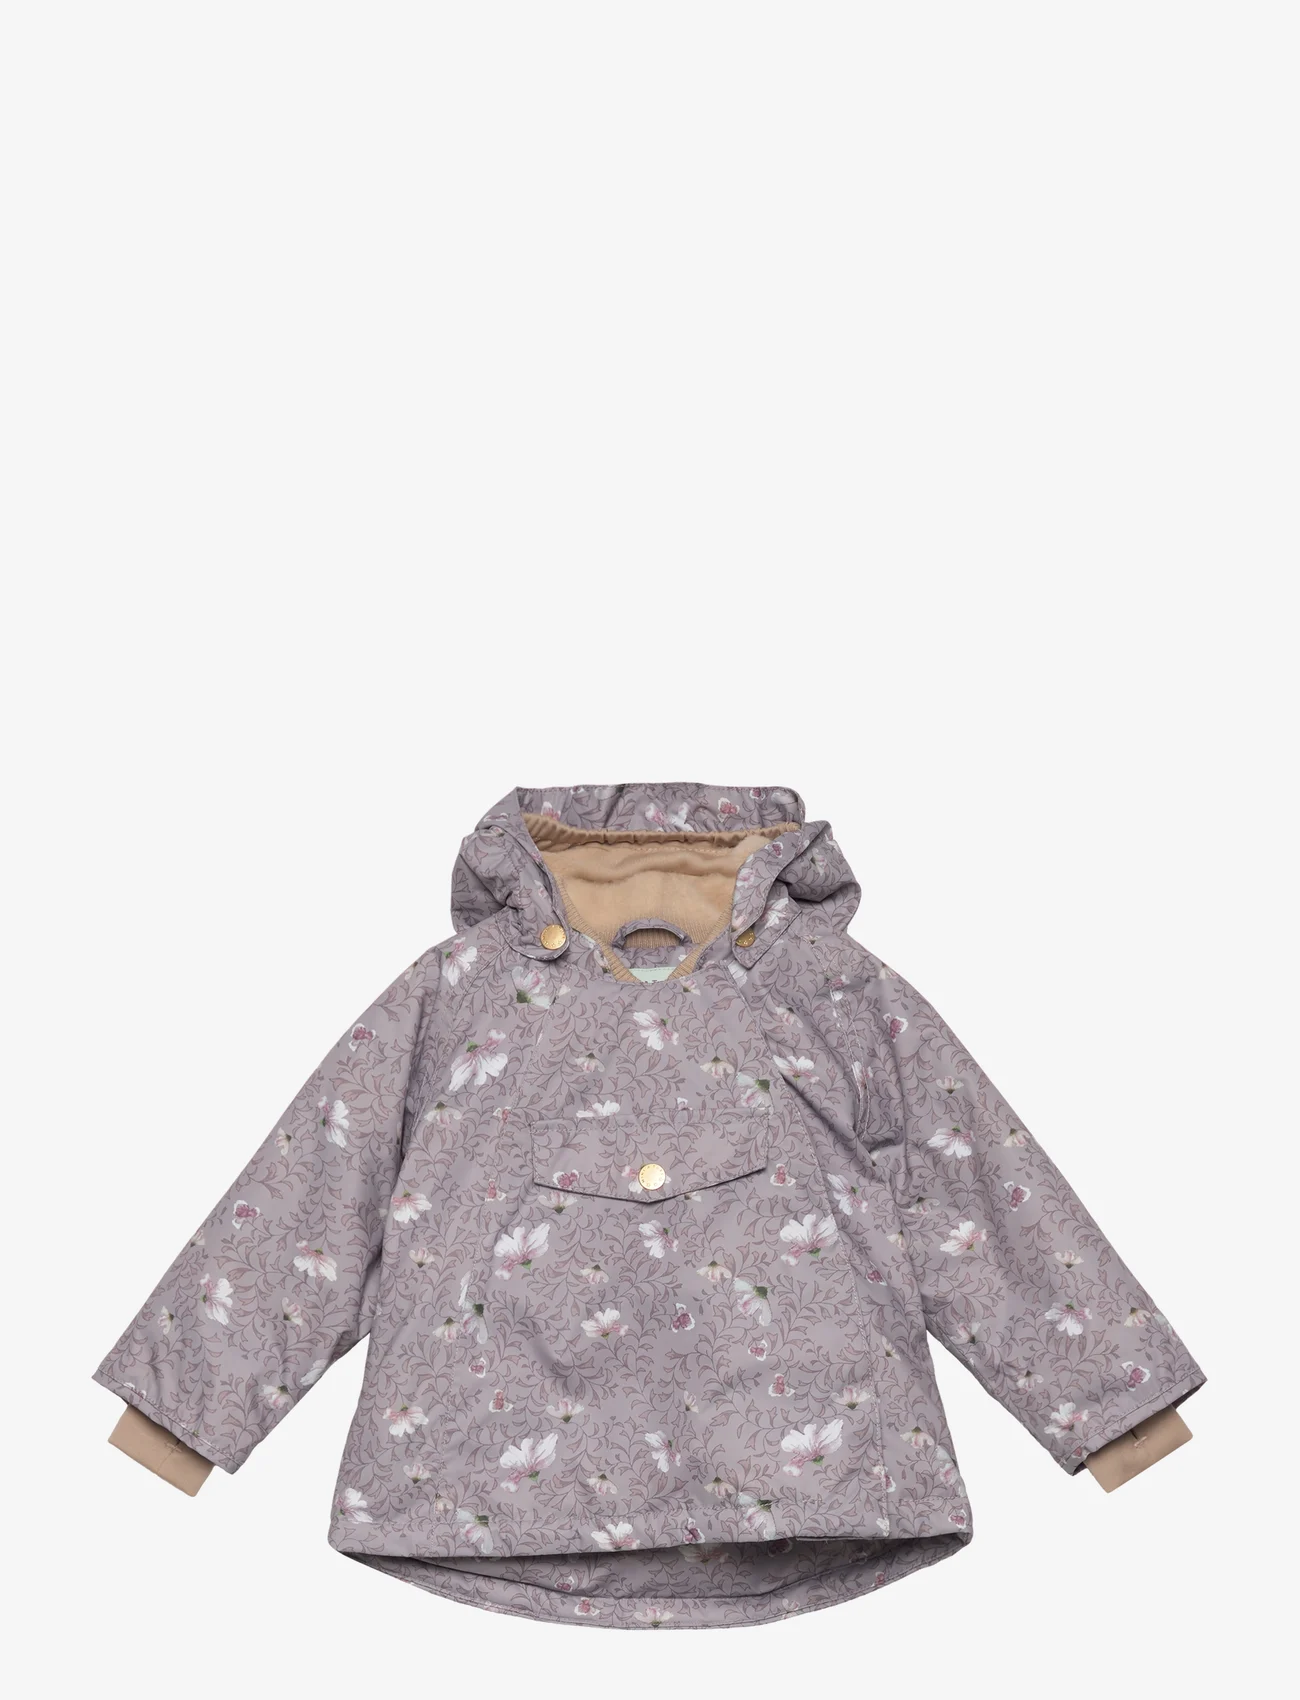 Mini A Ture - Wang printed fleece lined winter jacket. GRS - anoraks - print autumn flower field - 1